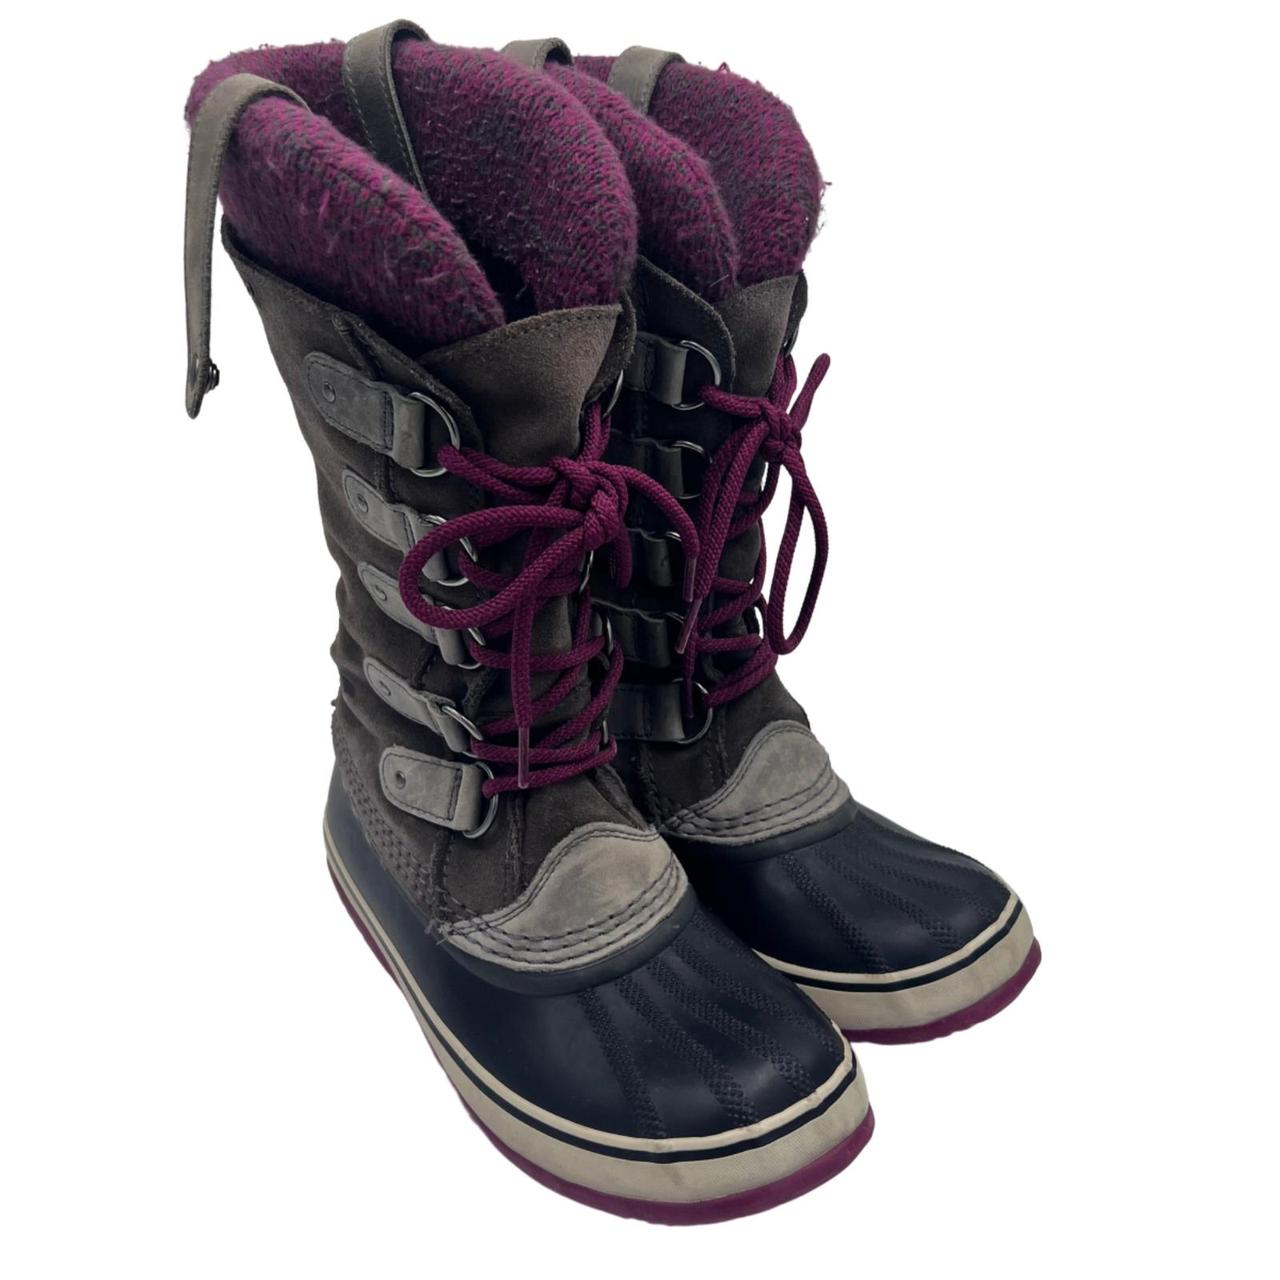 Sorel Women's Grey and Purple Boots (3)